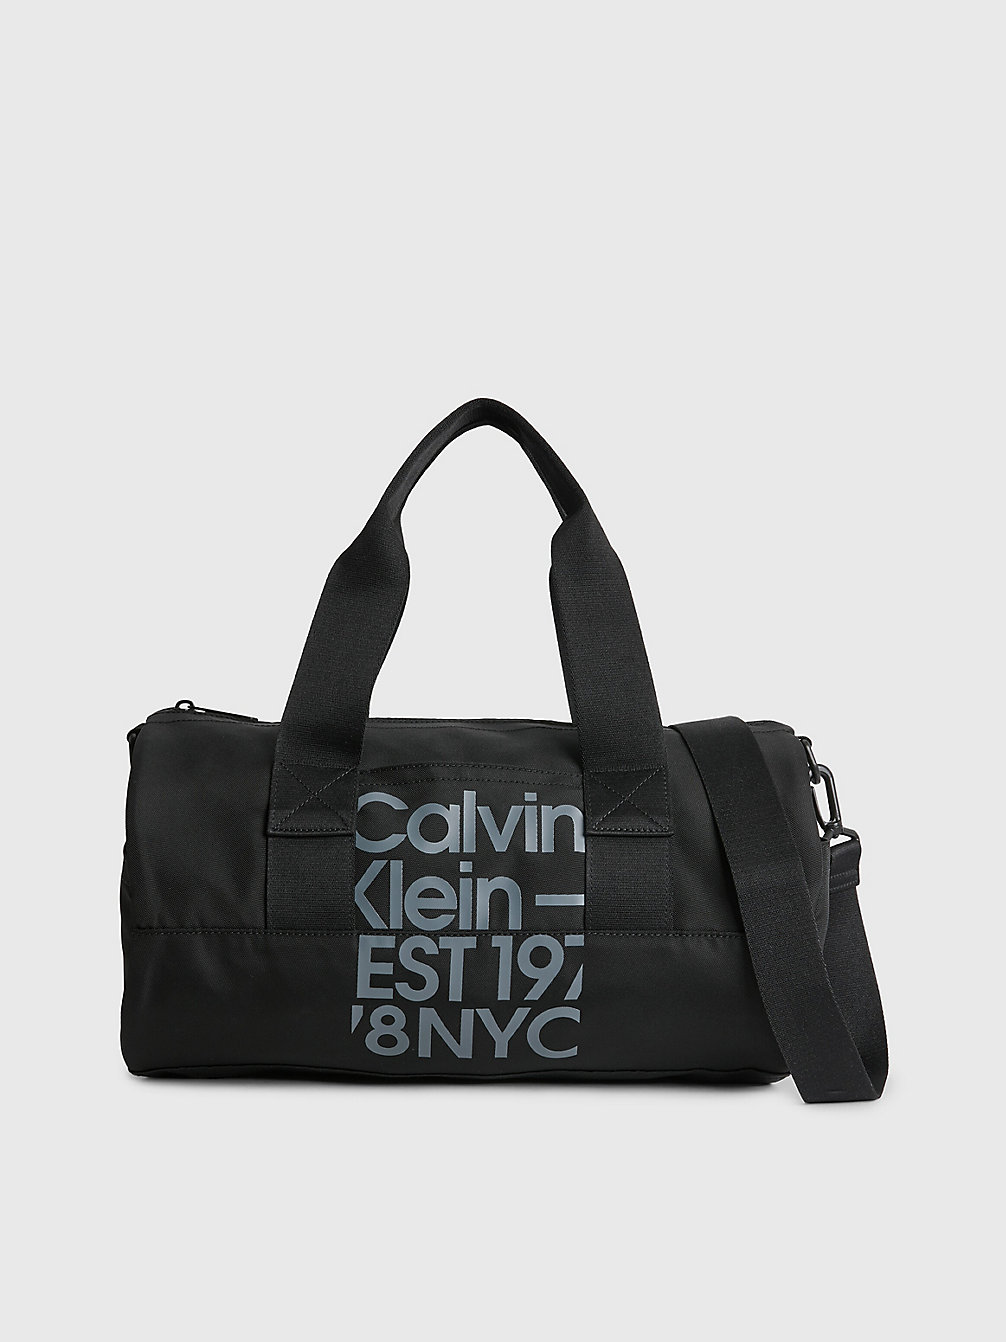 BLACK / OVERCAST GREY PRINT Duffle-Bag Aus Recyceltem Material undefined Herren Calvin Klein